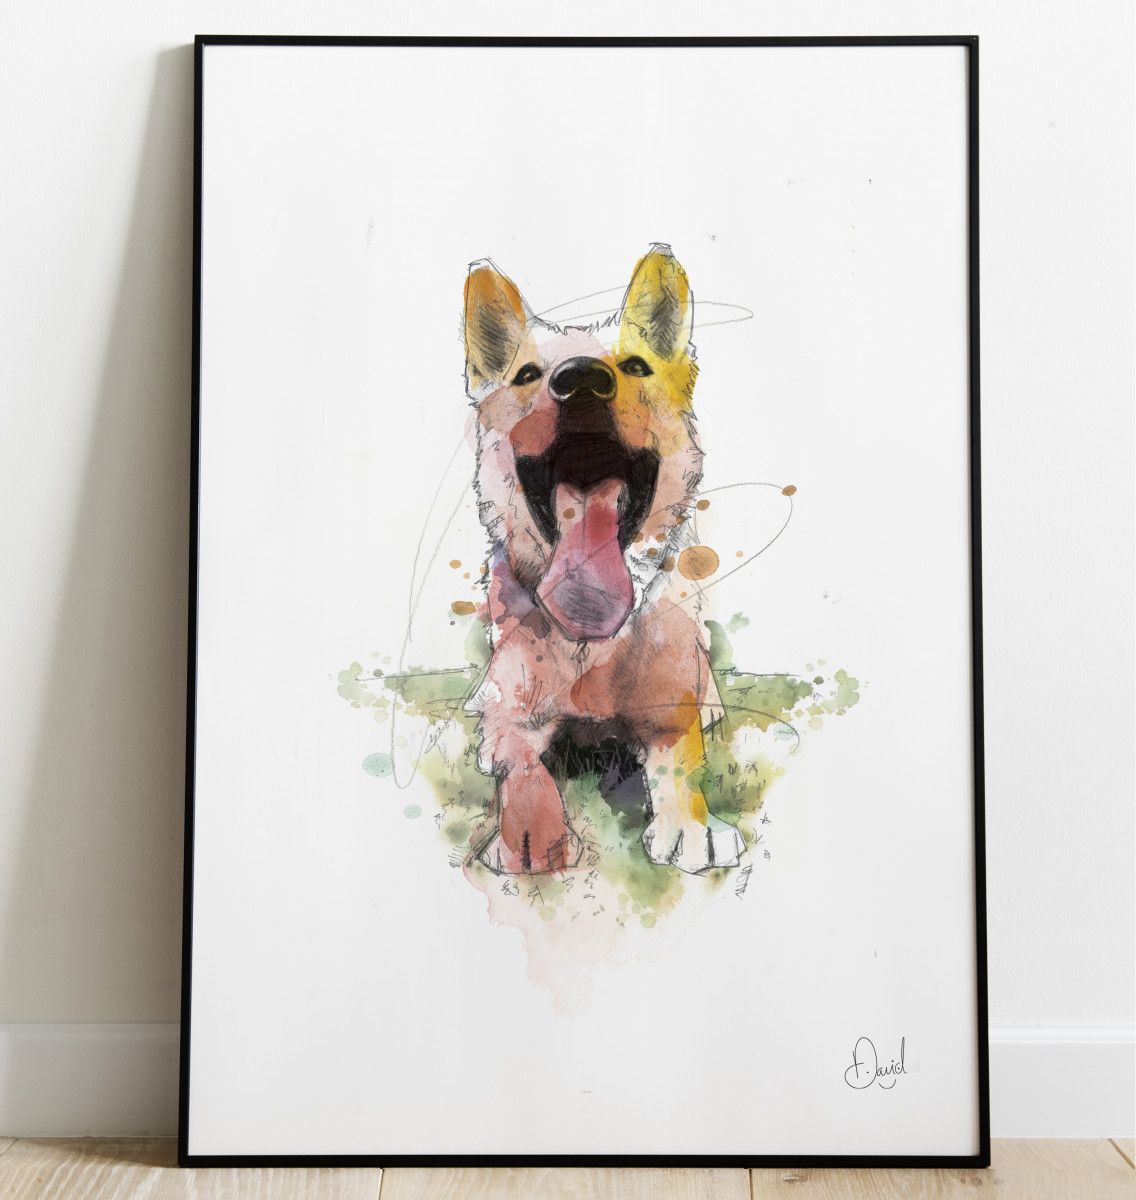 Small dog, big mouth - Dog art print